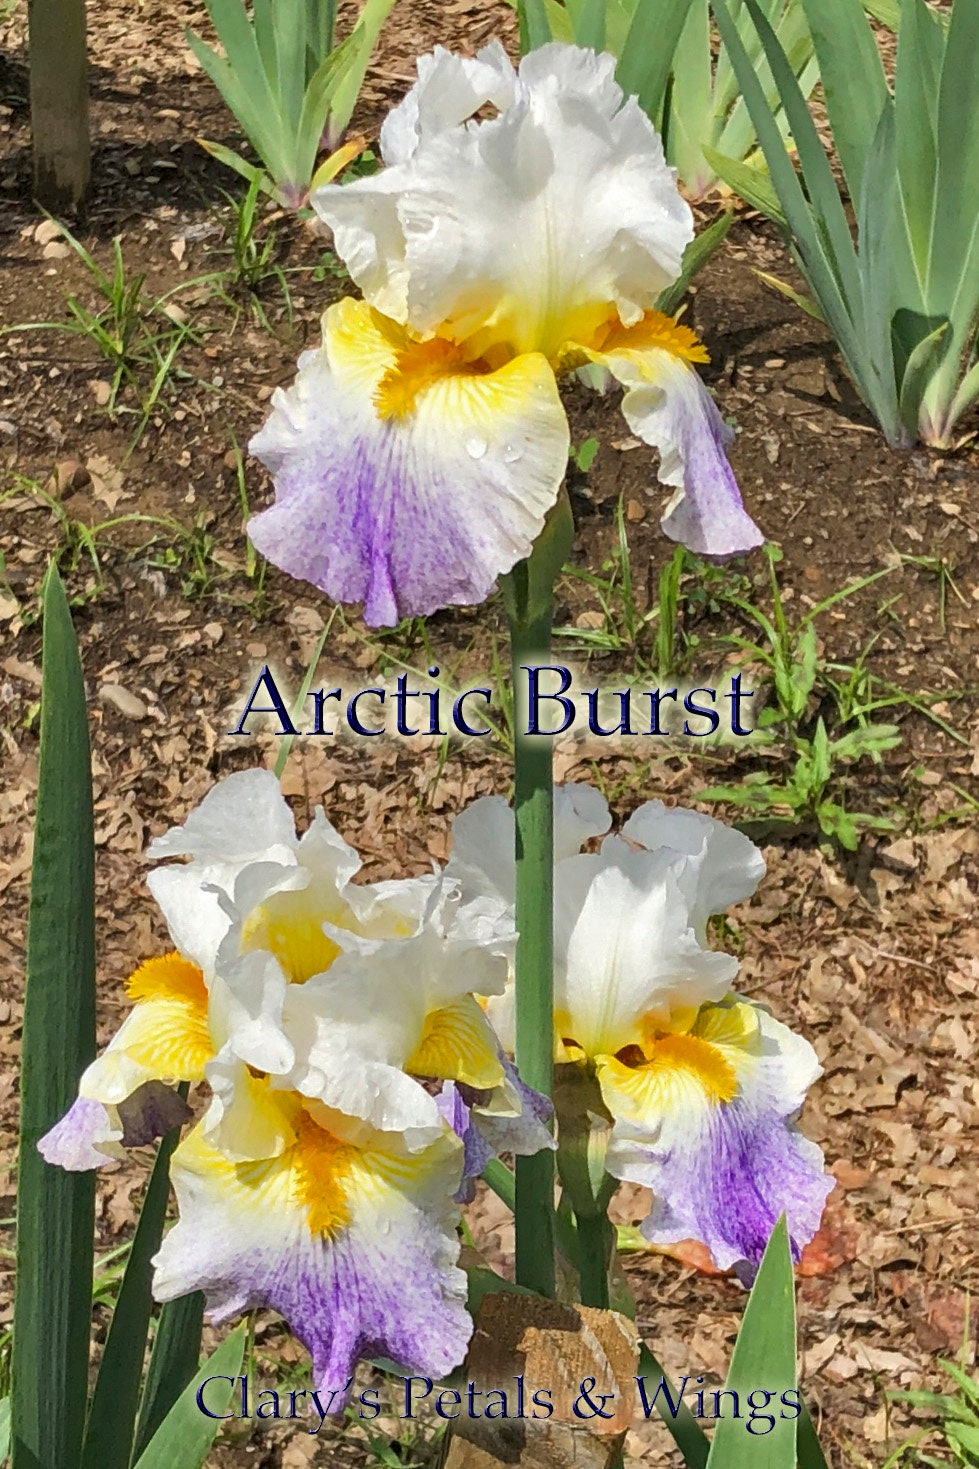 Arctic Burst - 2008 Tall Bearded Iris - Award Winner